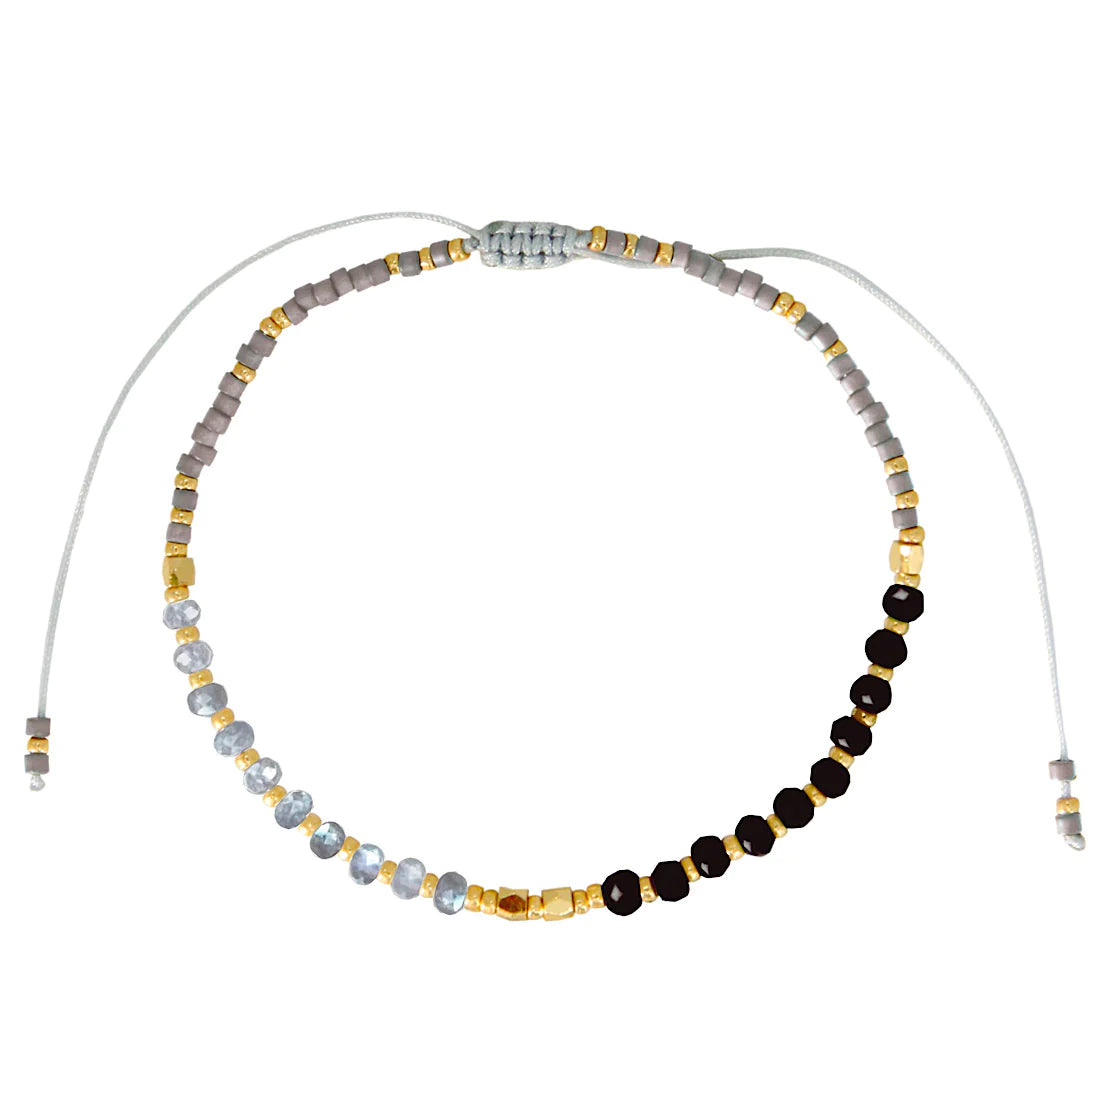 One bead strand of a three strand black-and-white beige bracelet set.